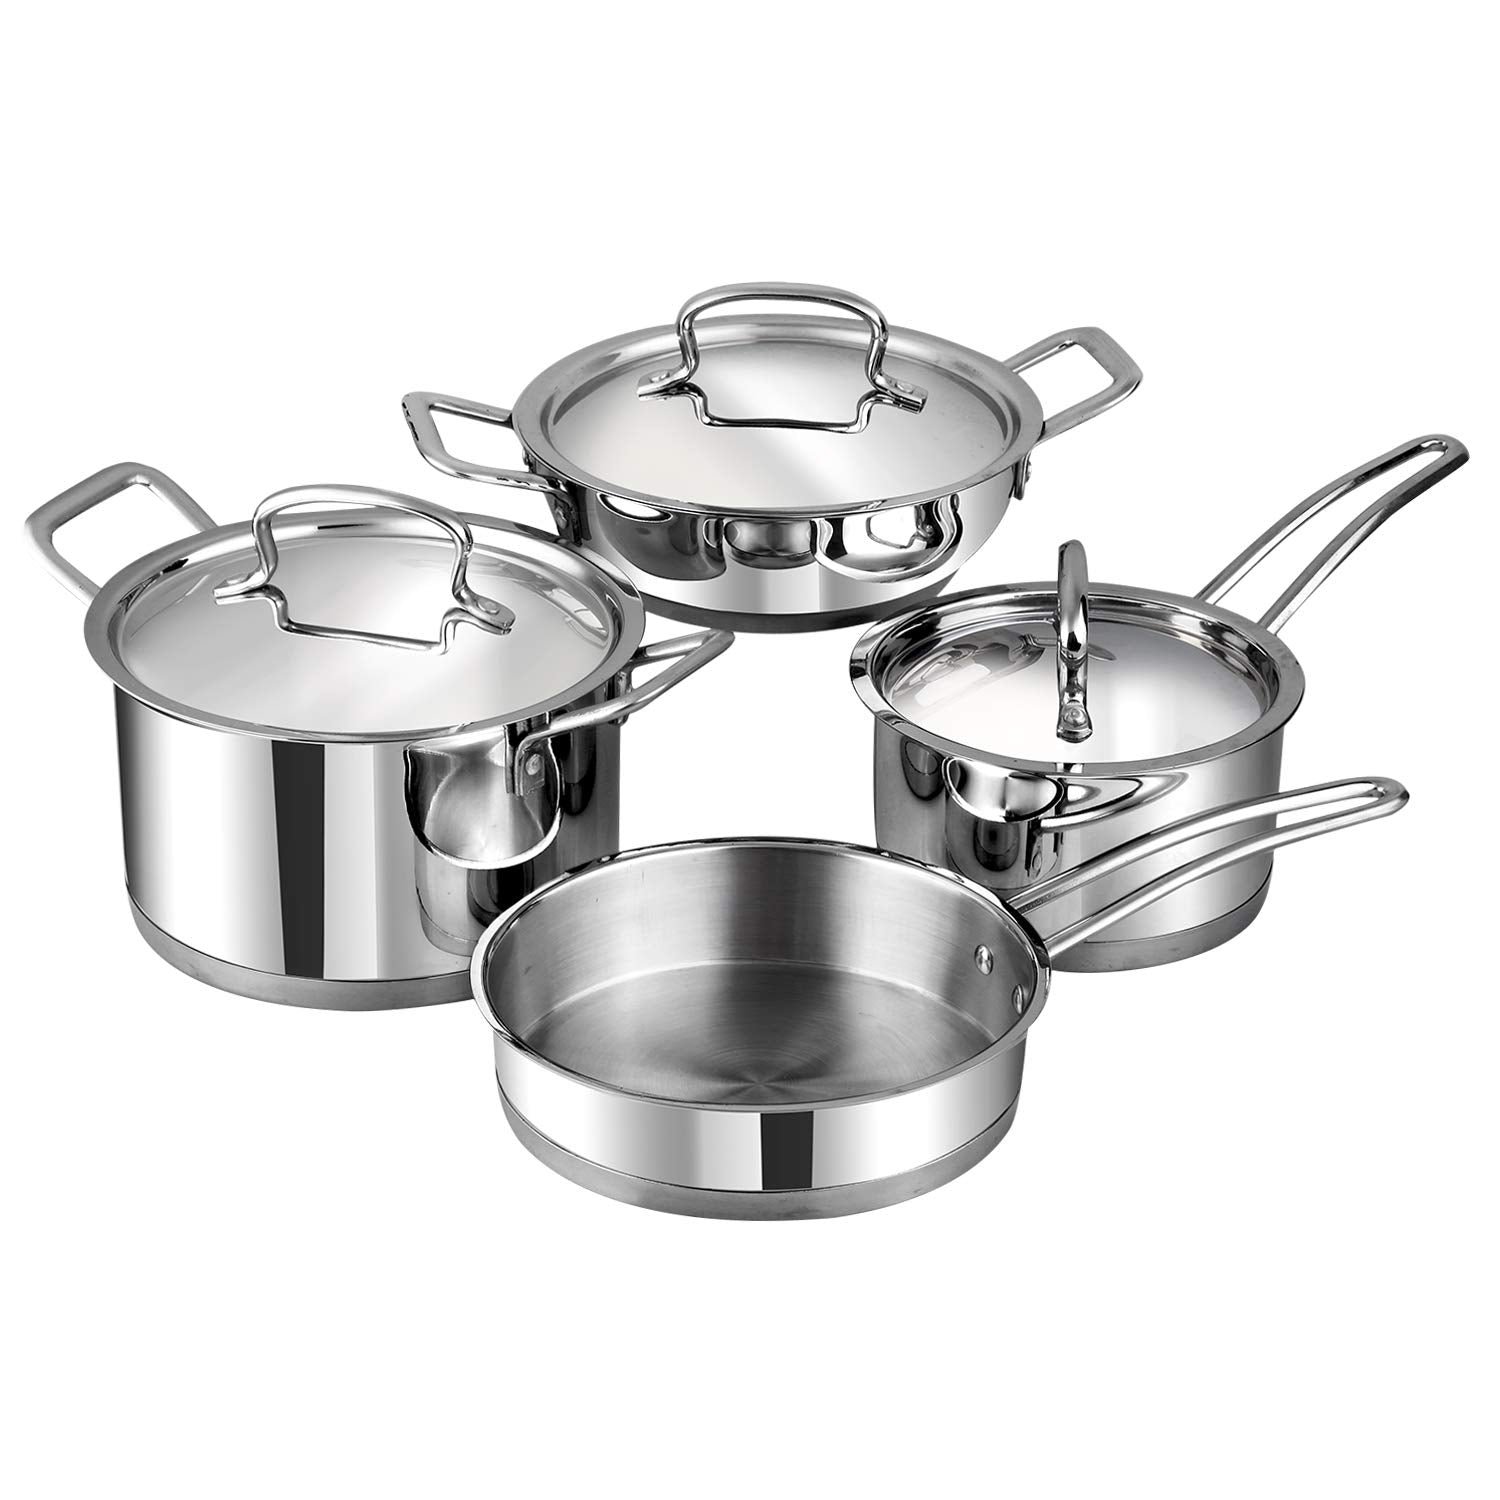 Vinod 7pc Stainless Steel Cookware Set (Frypan/Sauce Pan 2 Cooking Pot